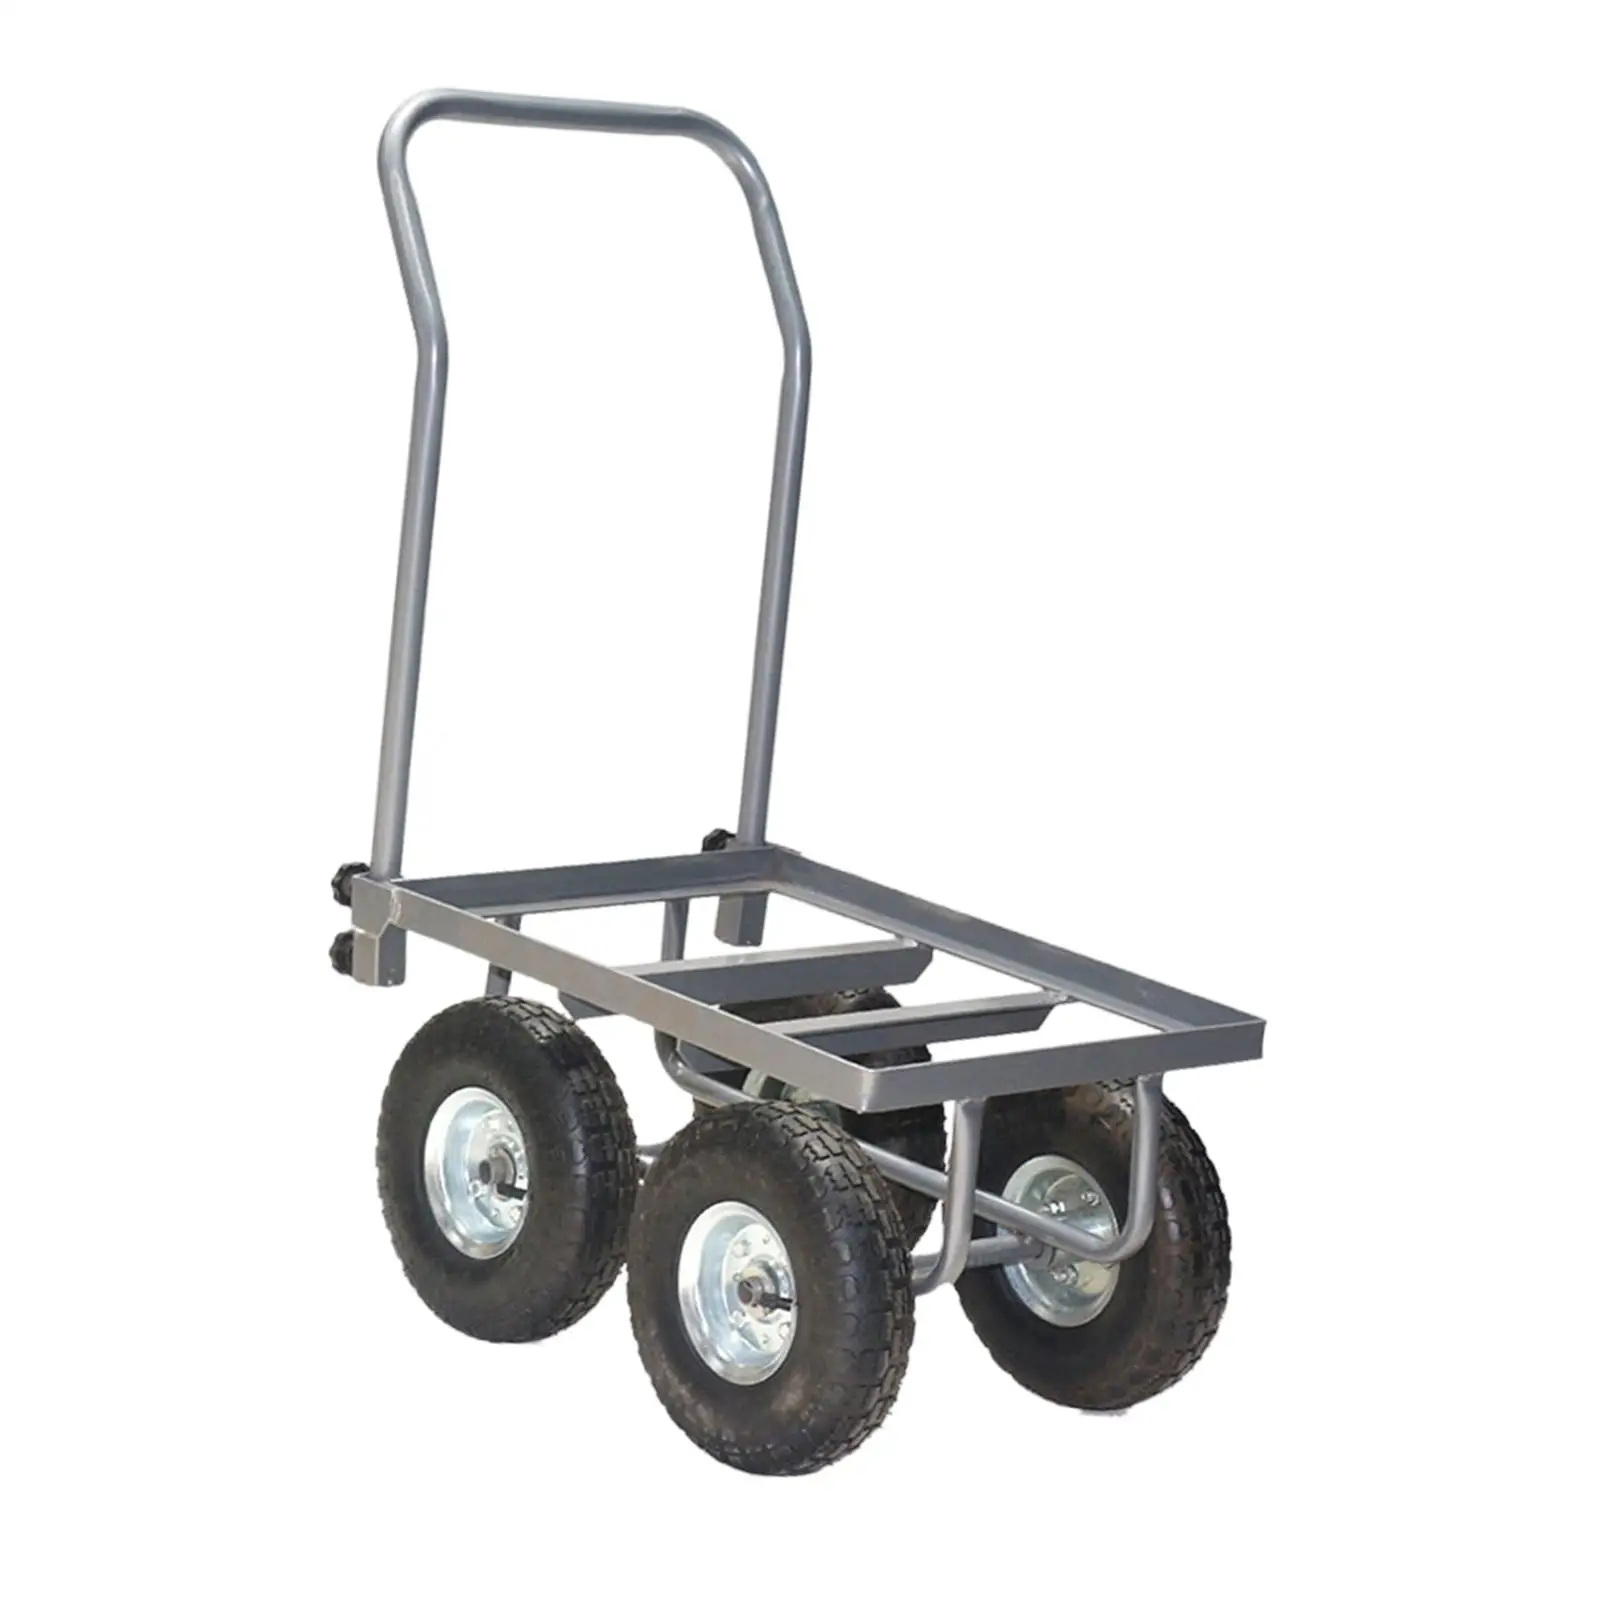 Hand Push Cart Heavy Duty Platform Trolley for Flower Pots Furniture Office